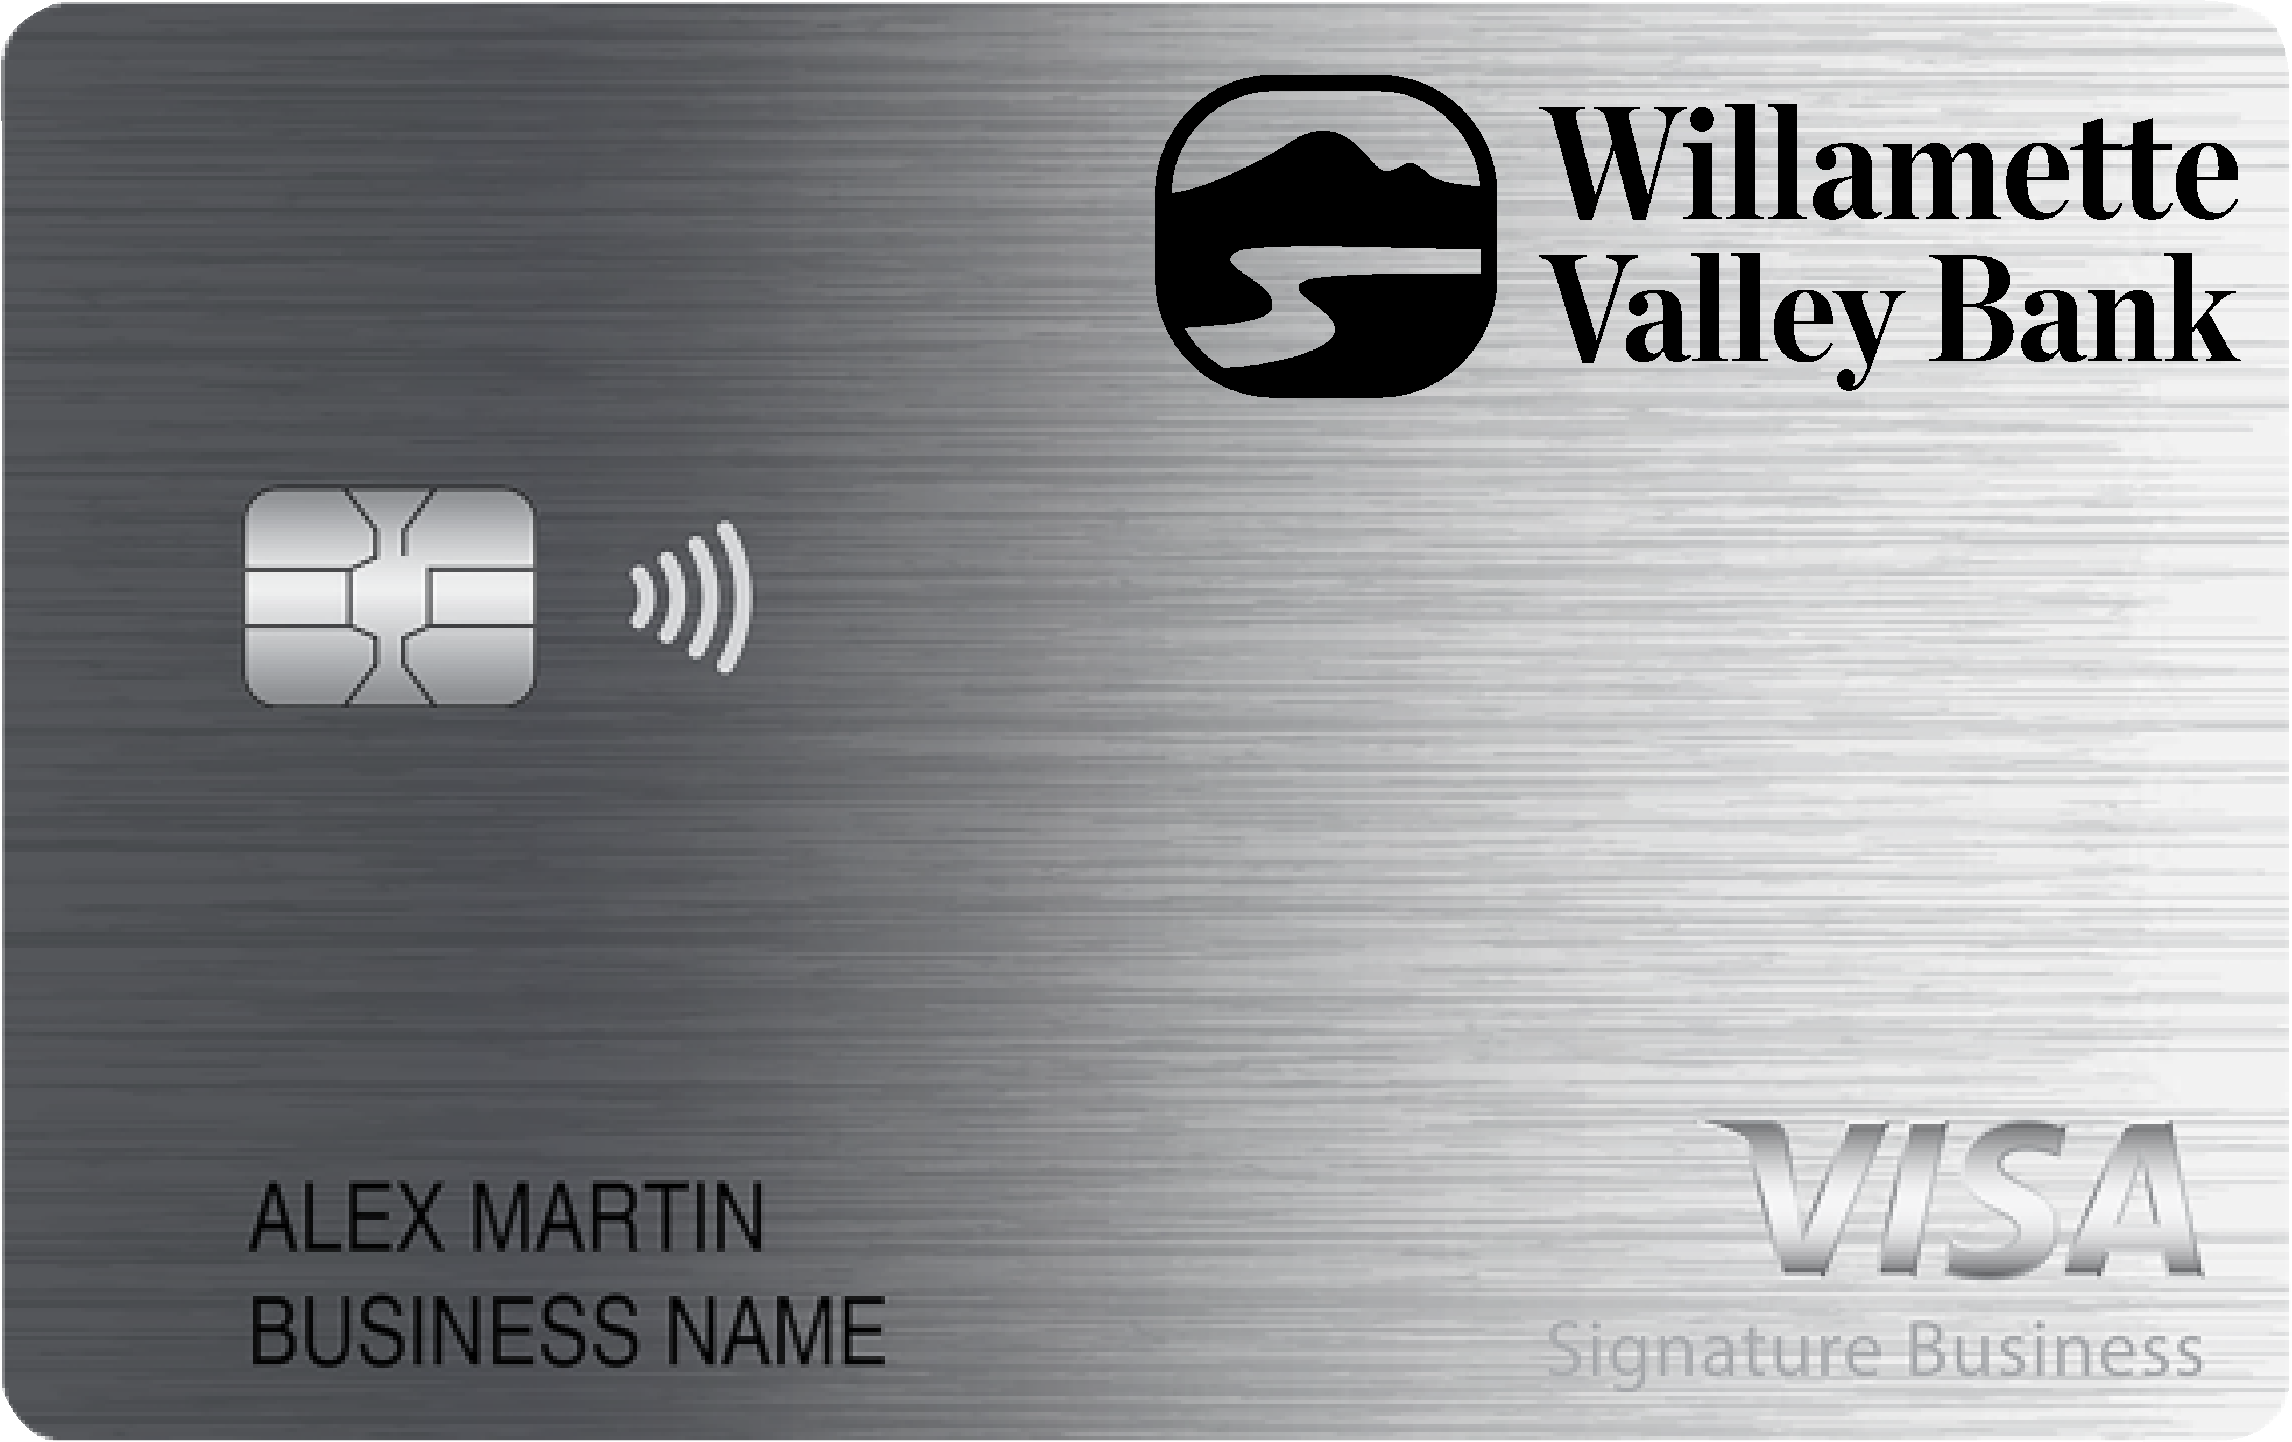 Willamette Valley Bank Smart Business Rewards Card